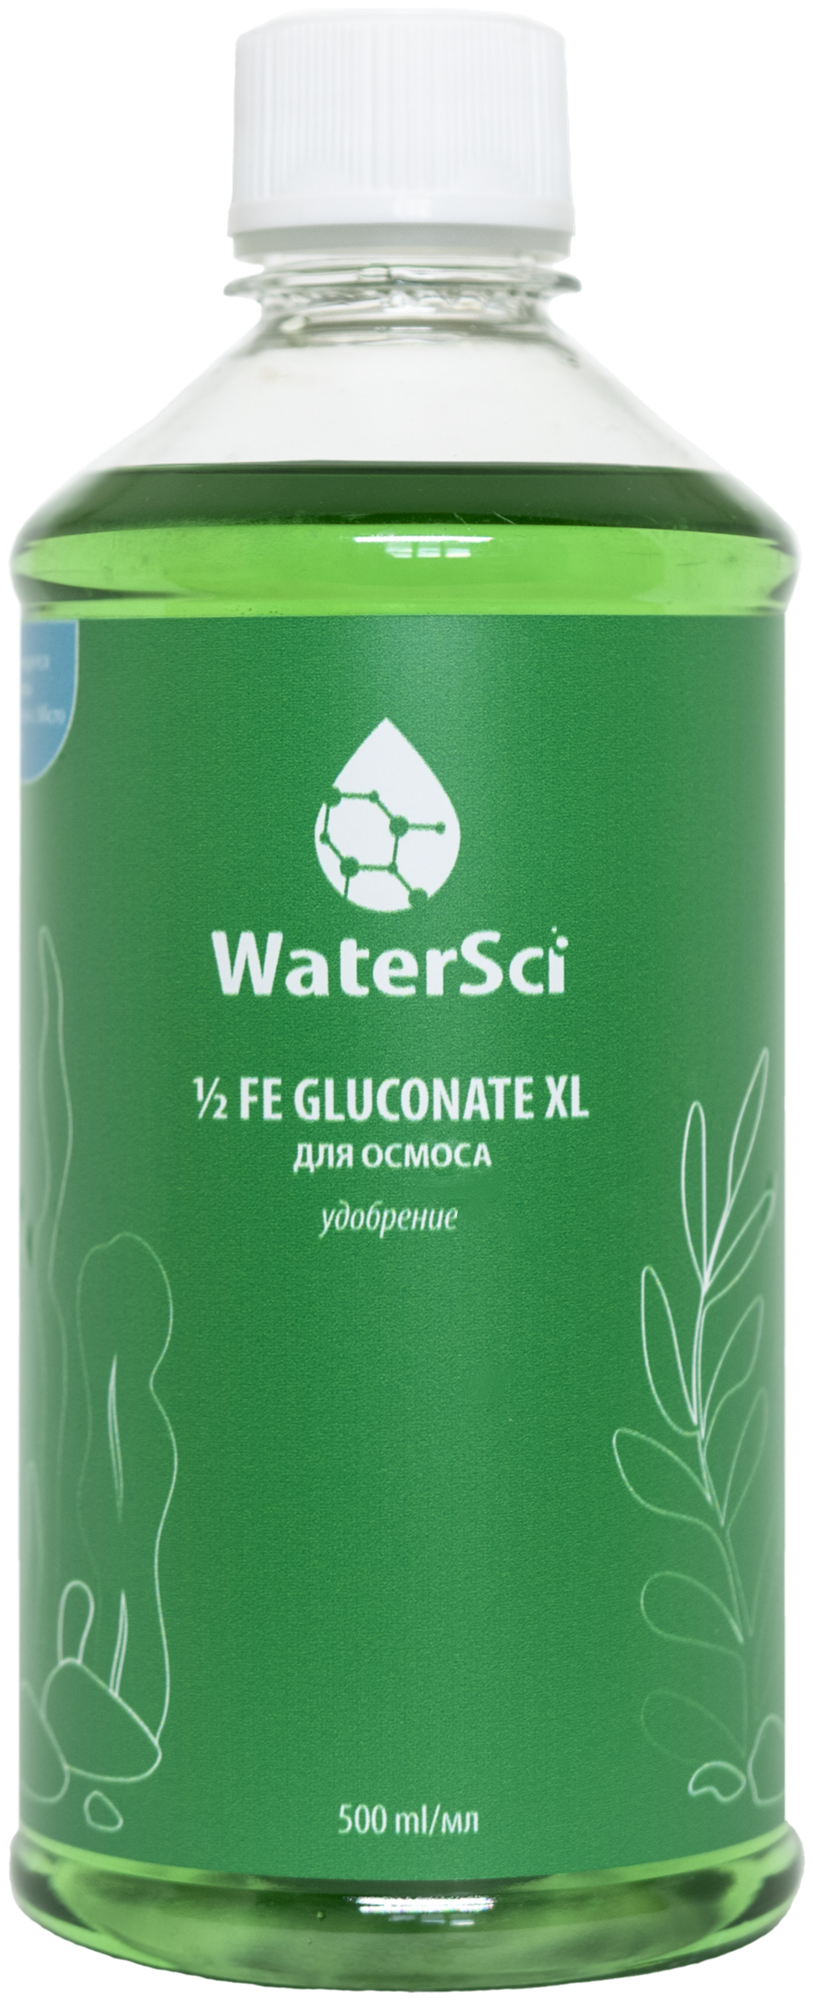 Удобрение с железом Water Sci. 1/2 Fe gluconate XL, 500 мл.